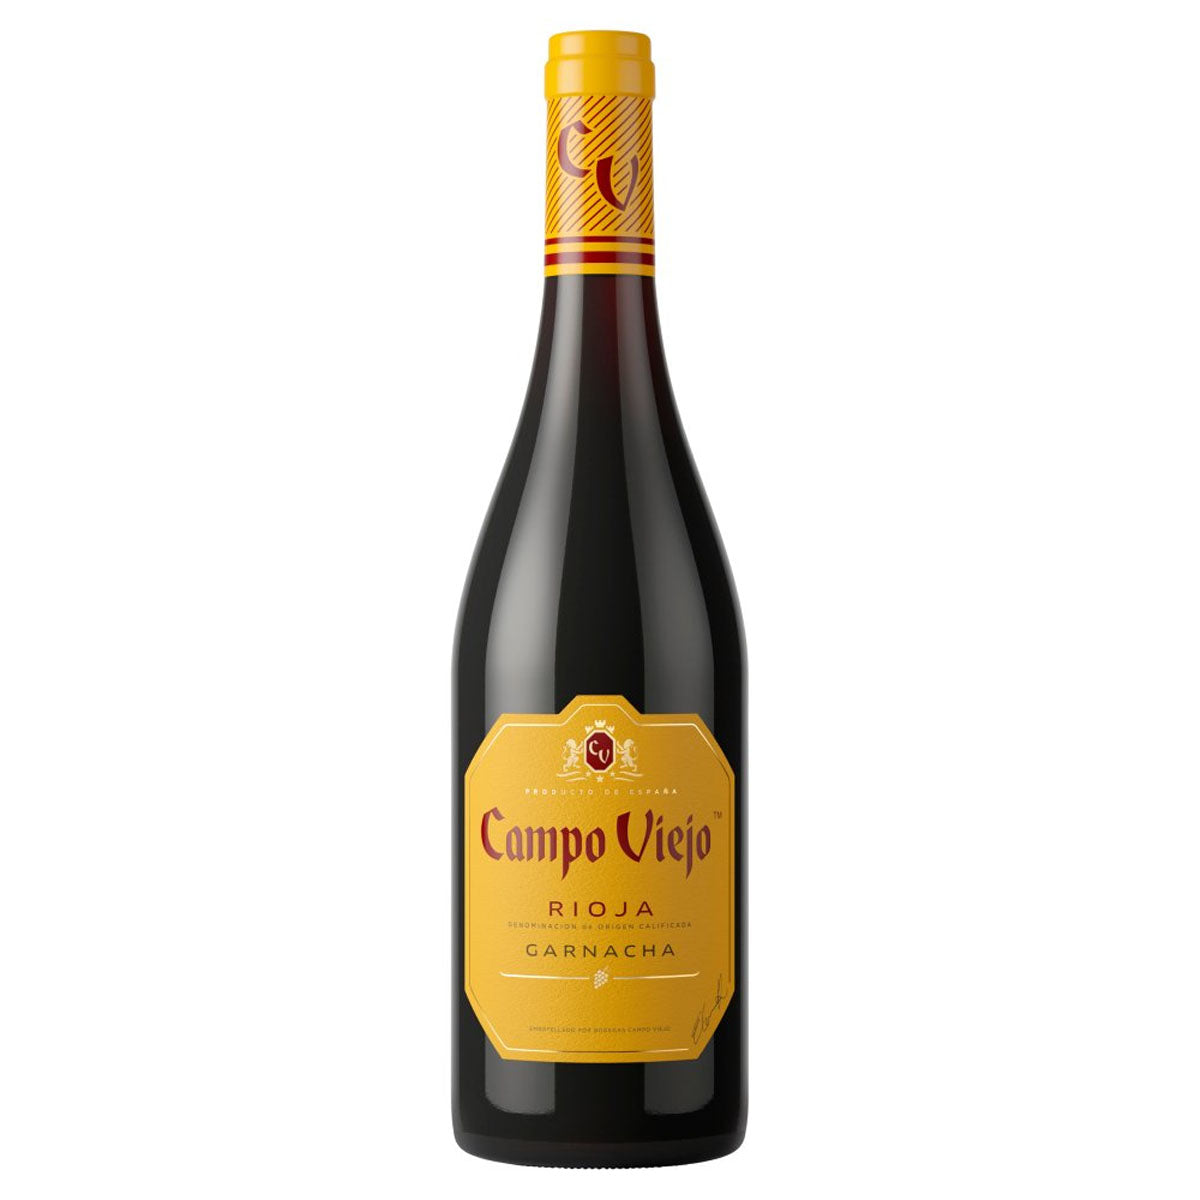 A bottle of Campo Viejo - Rioja Garnacha Red Wine (14% ABV) - 750ml on a white background.